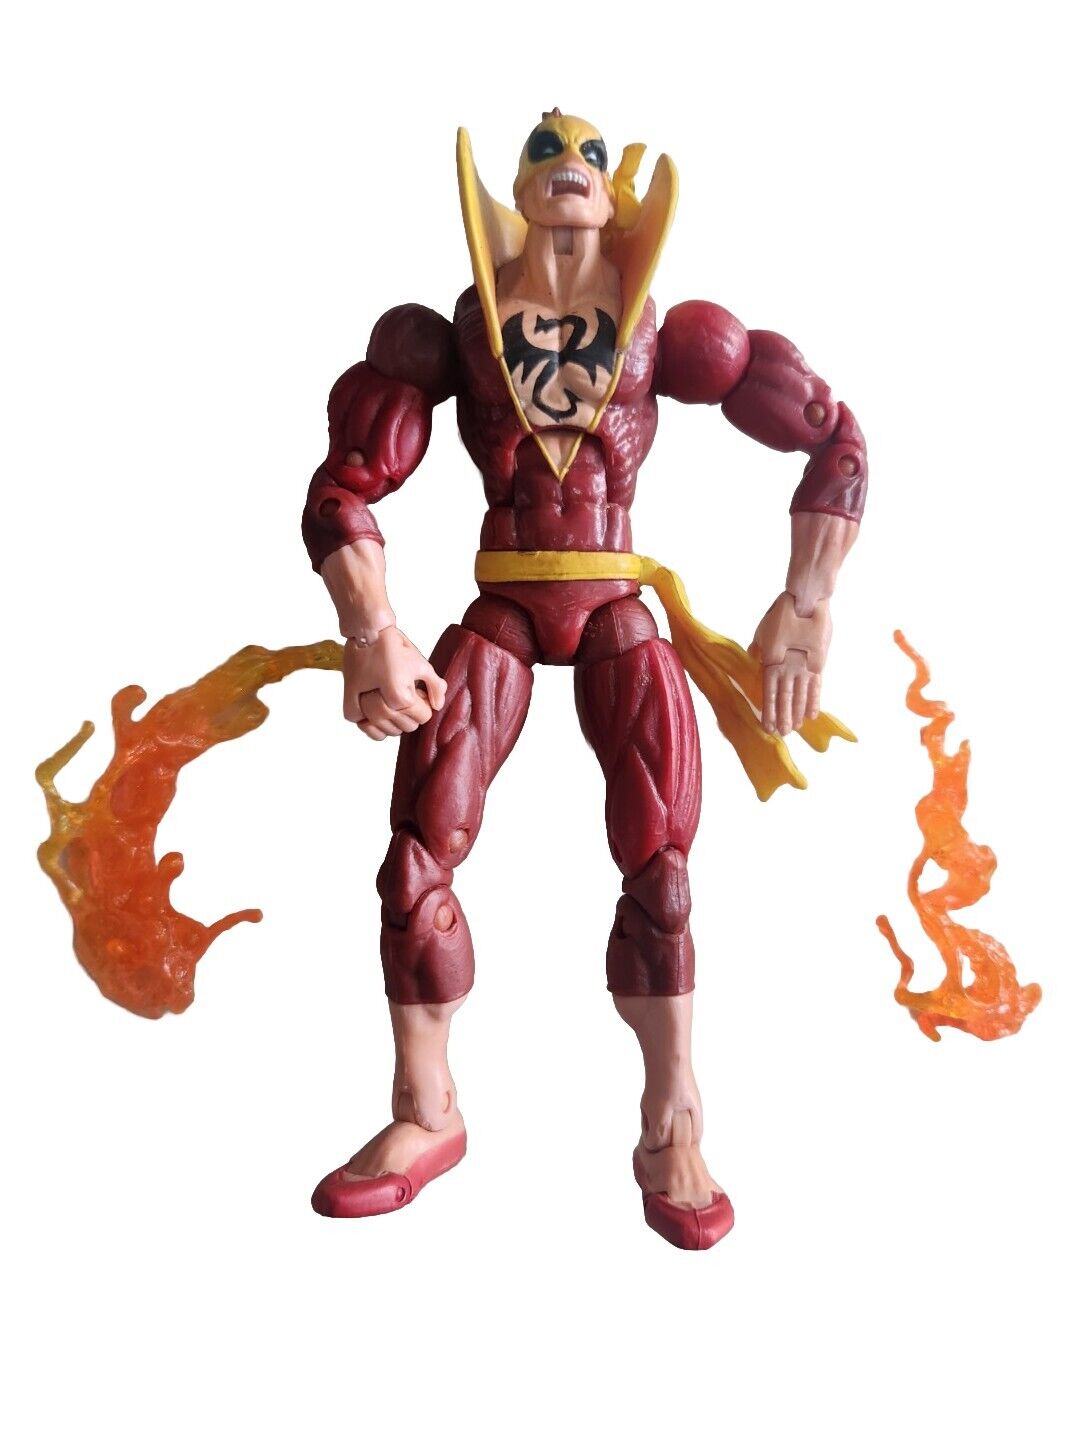 2005 Toy Biz Marvel Legends Apocalypse Series • 6" Iron Fist Figure Red Variant 